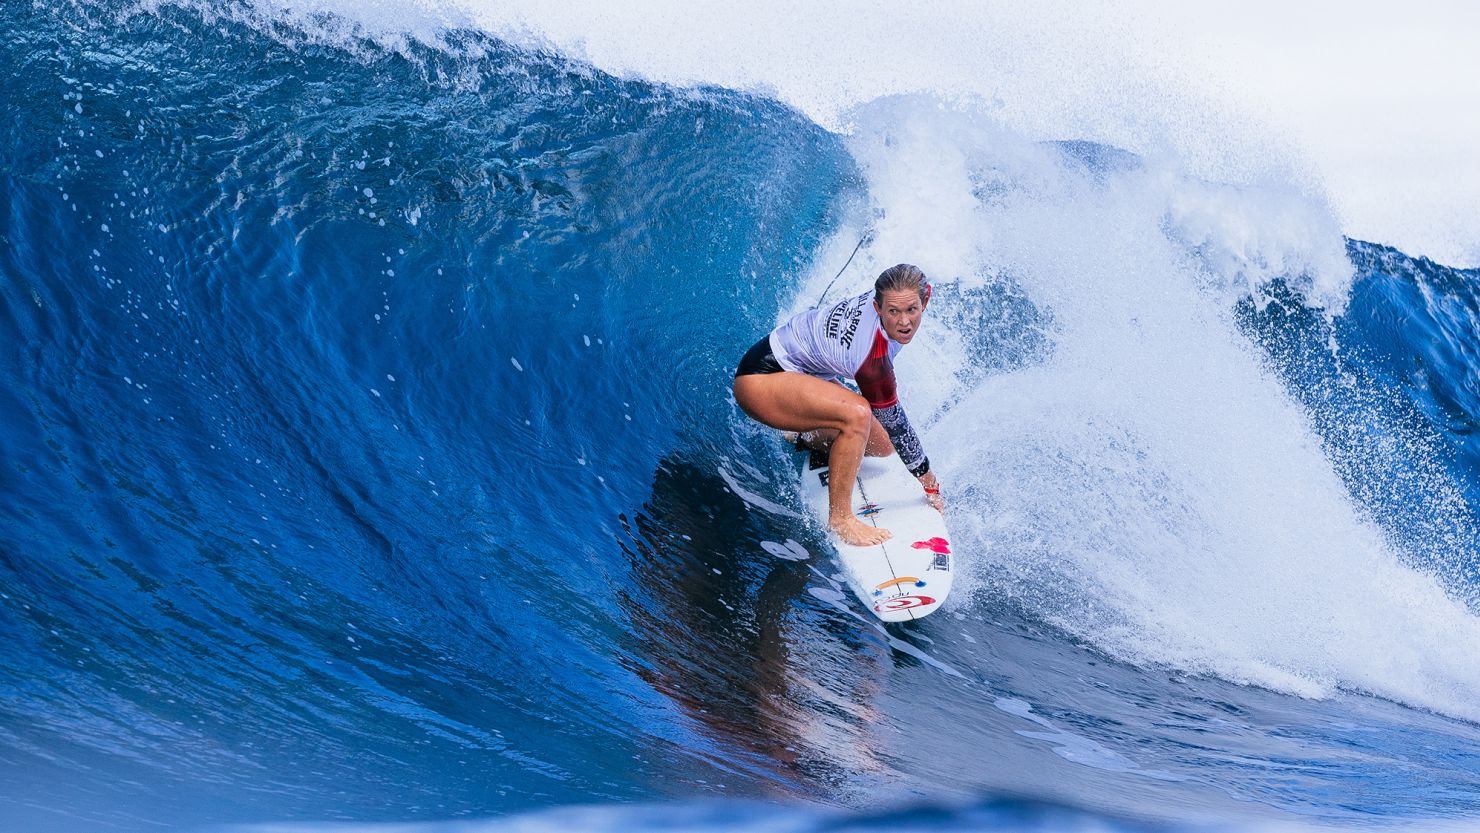 Bethany Hamilton surfing on January 30, 2022 in Haleiwa, Hawaii.